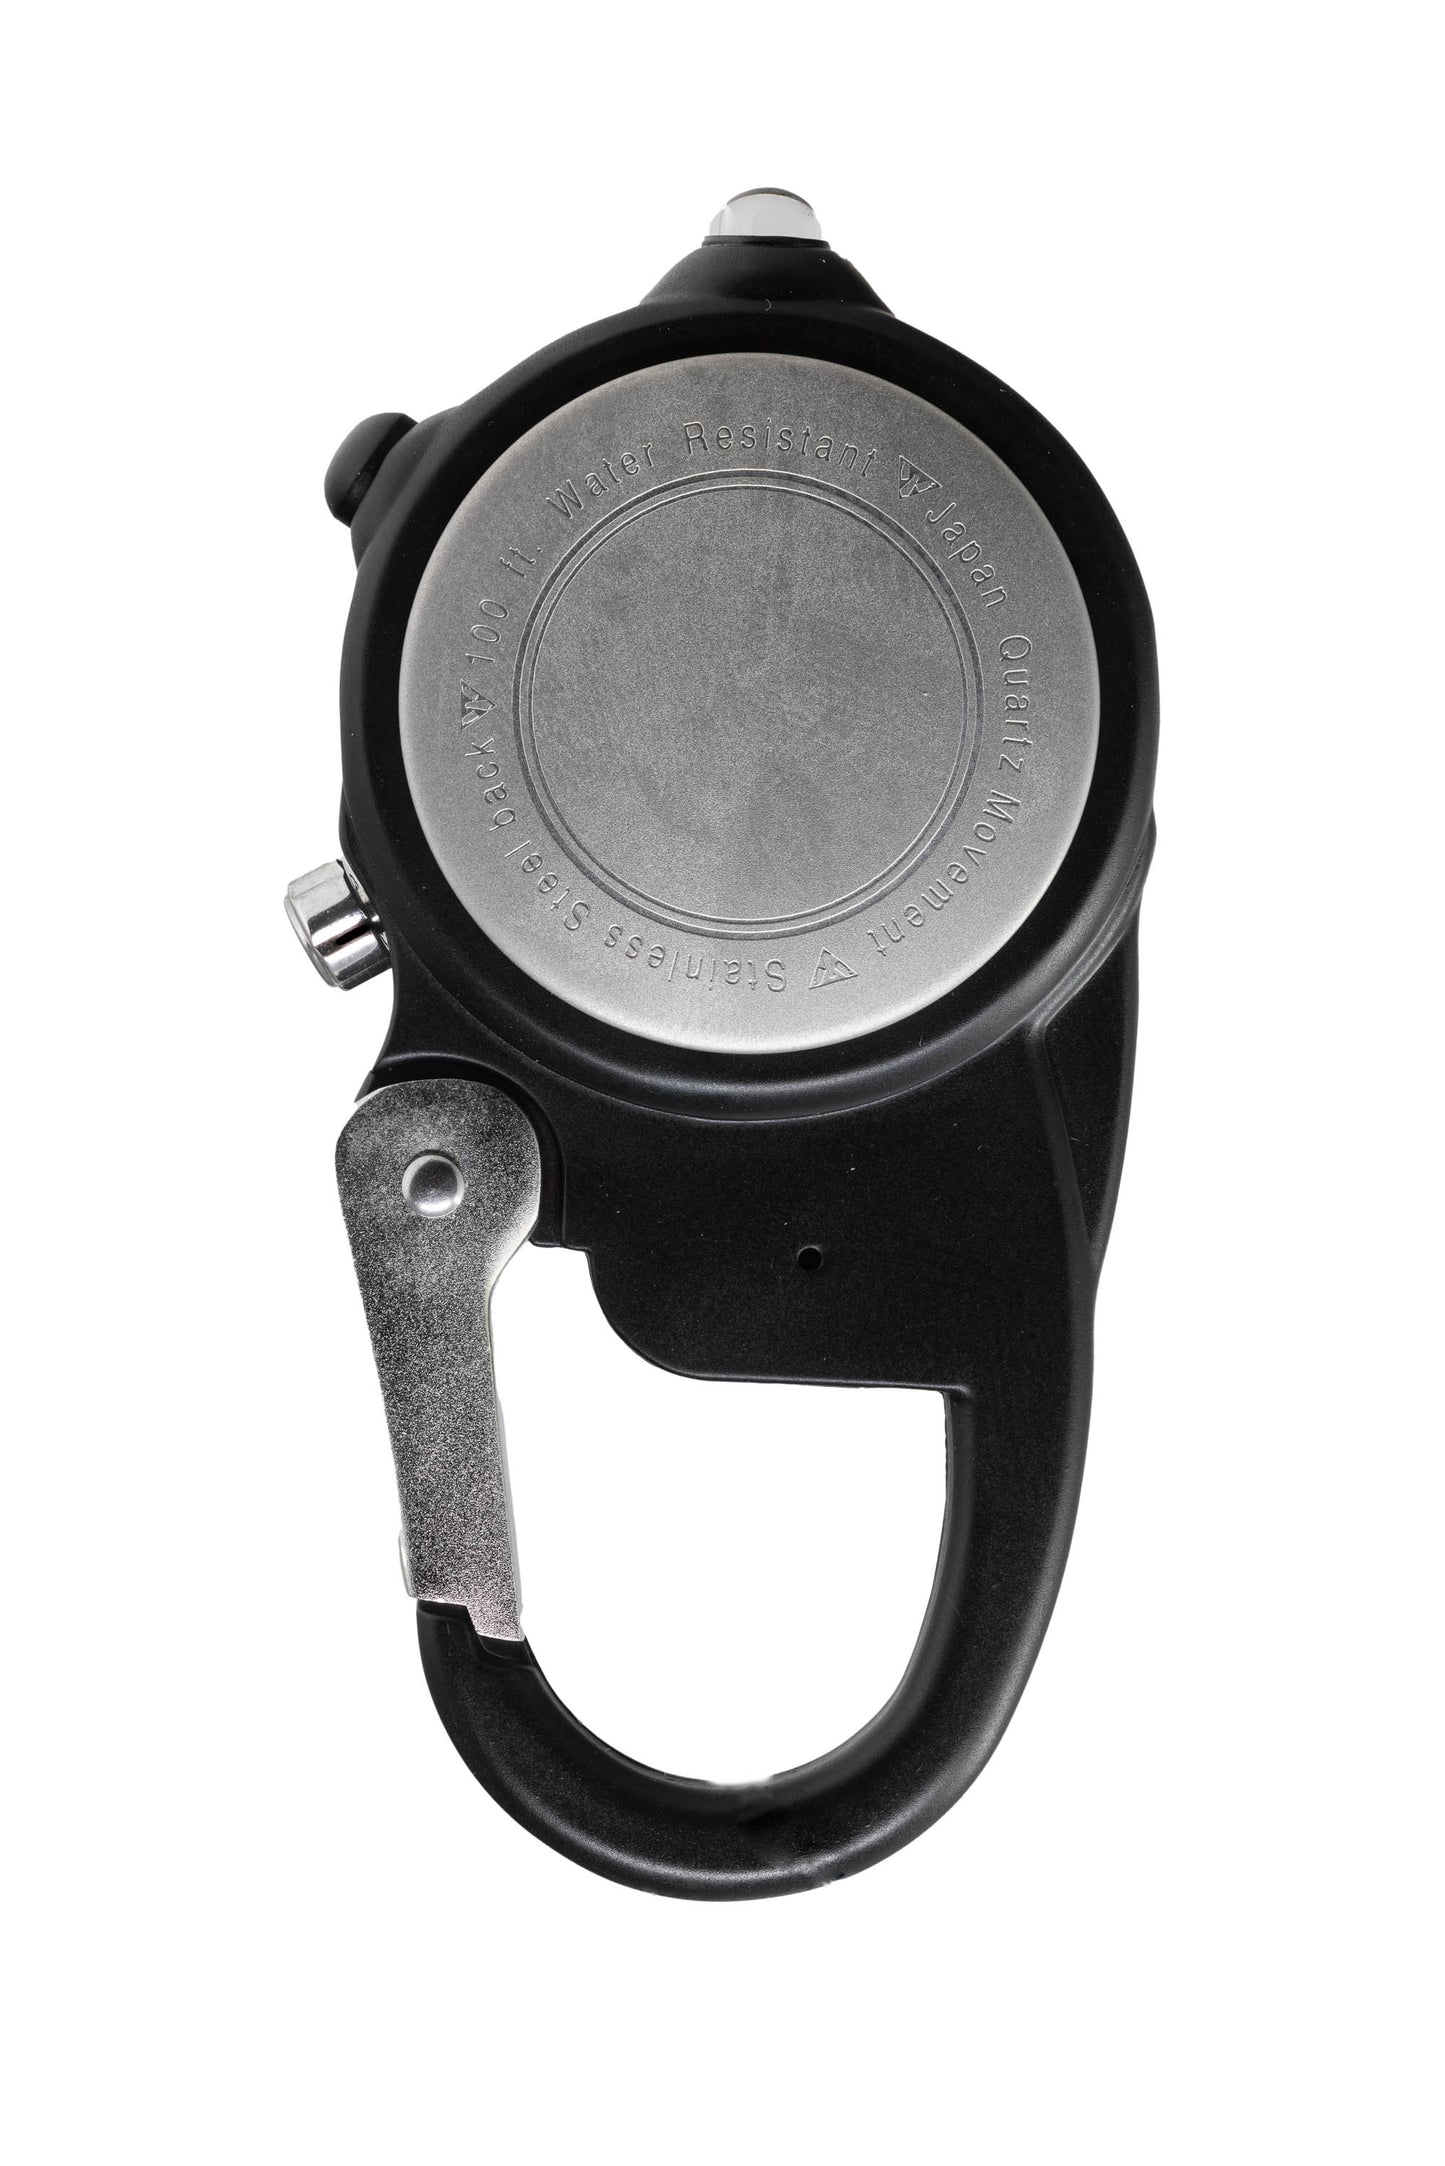 Miniclip Microlight - Black Case Blue Dial